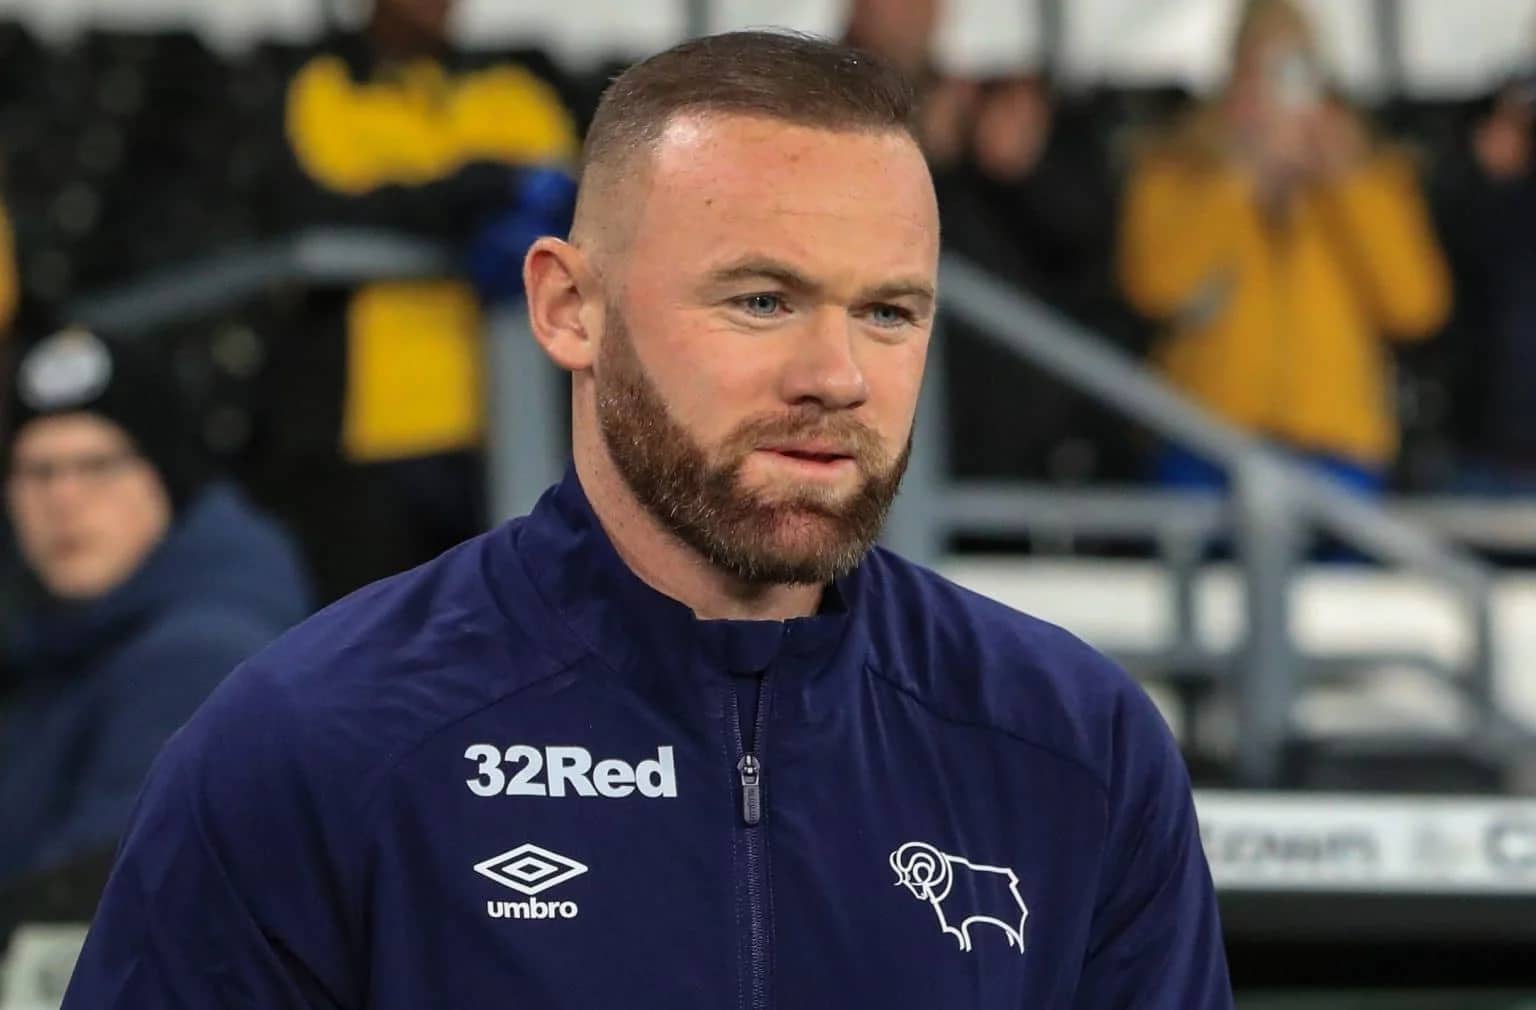 Derby County captain Wayne Rooney